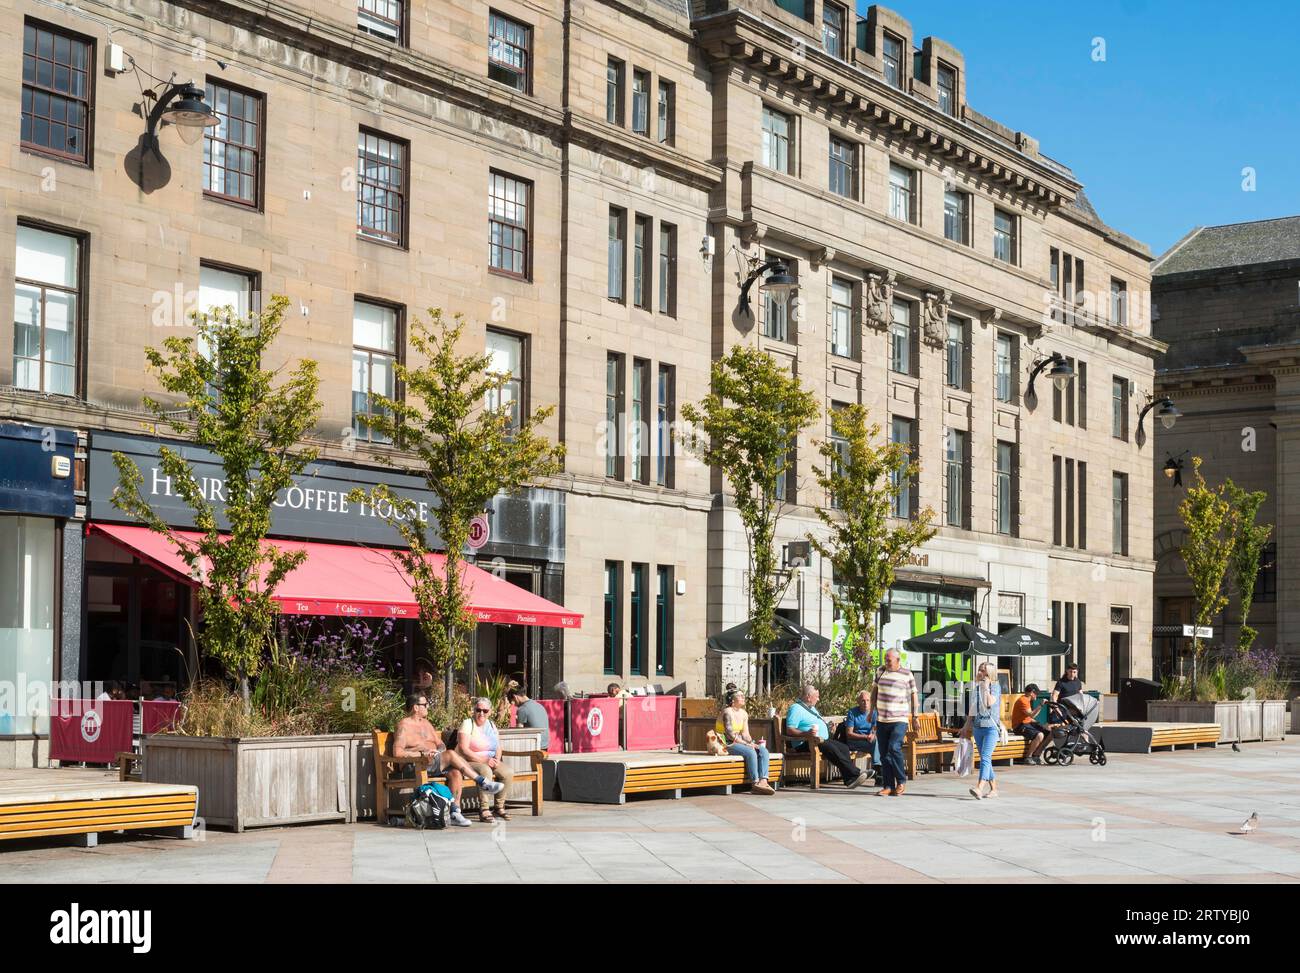 People sitting in the sunshine. City Square, Dundee, Scotland, UK Stock Photo